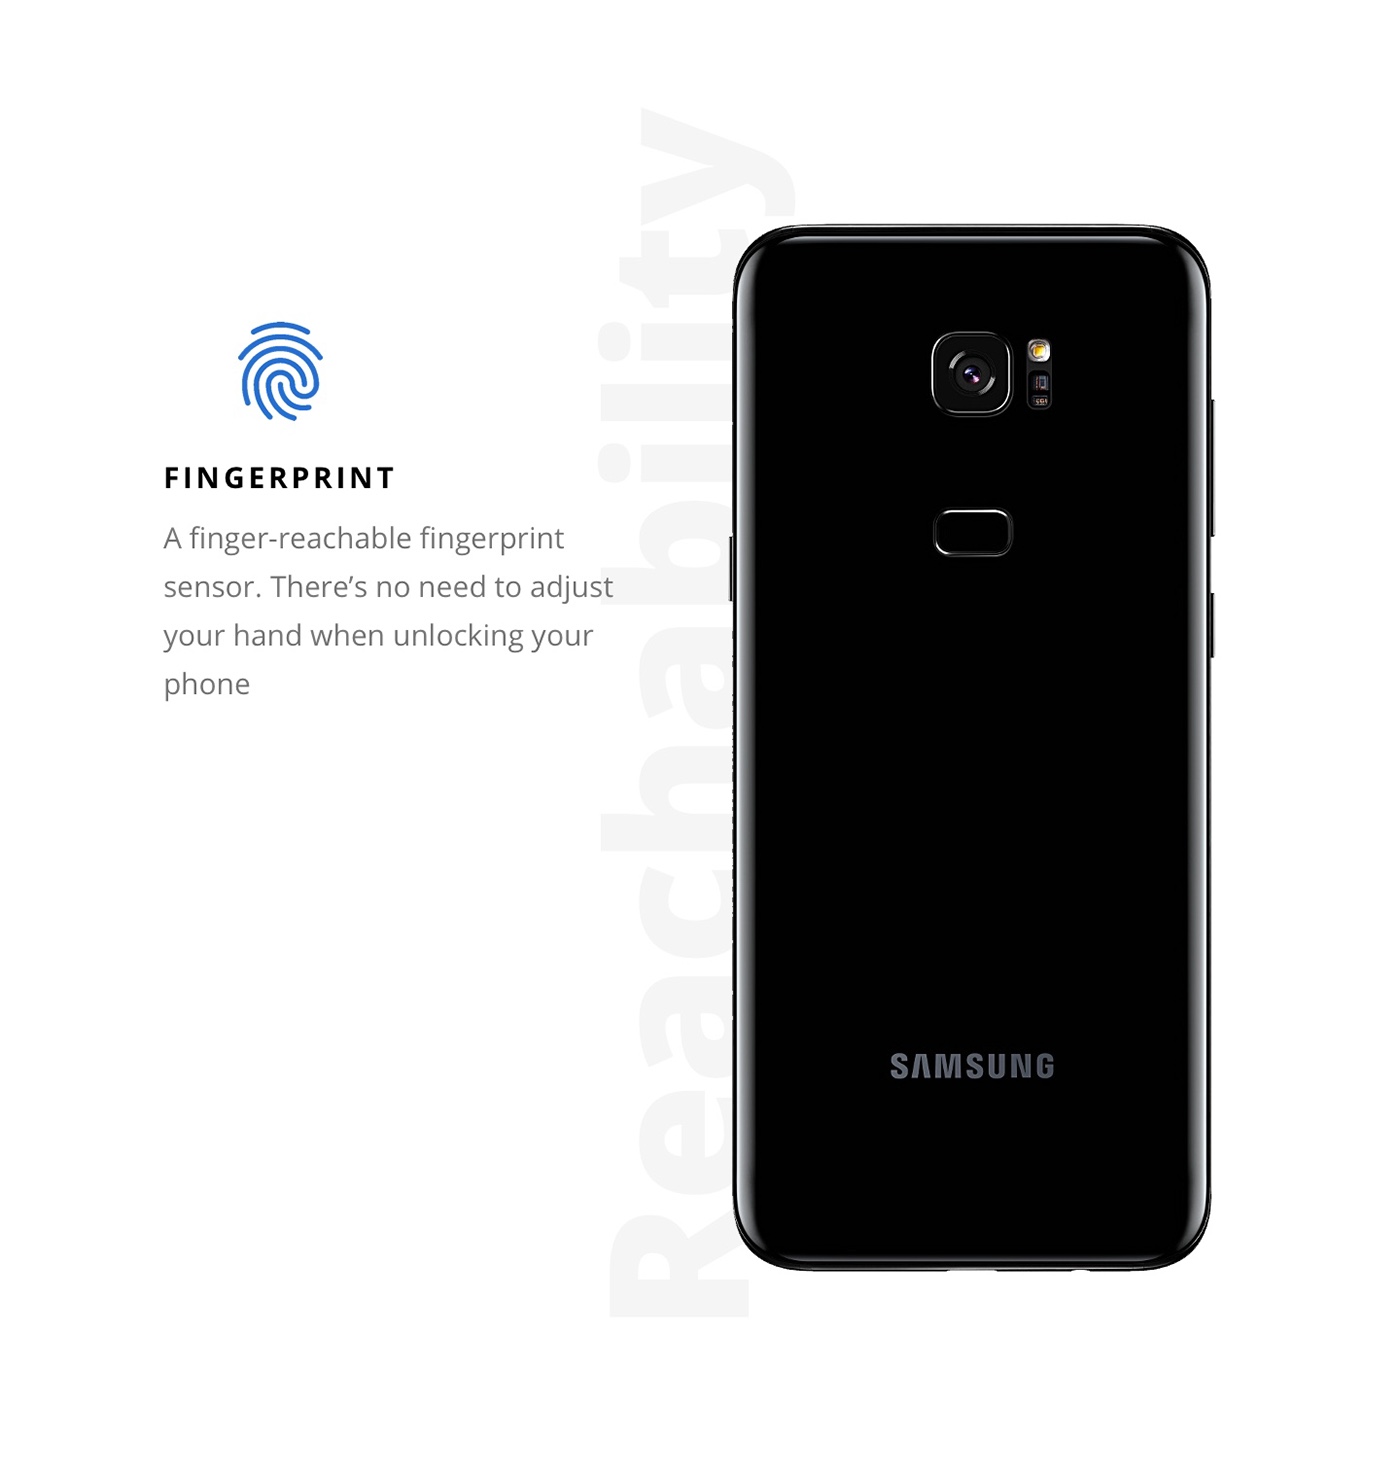 samsung galaxy s8 concept concept phone Galaxy s8 concept fingerprint infinity display screen galaxy s8